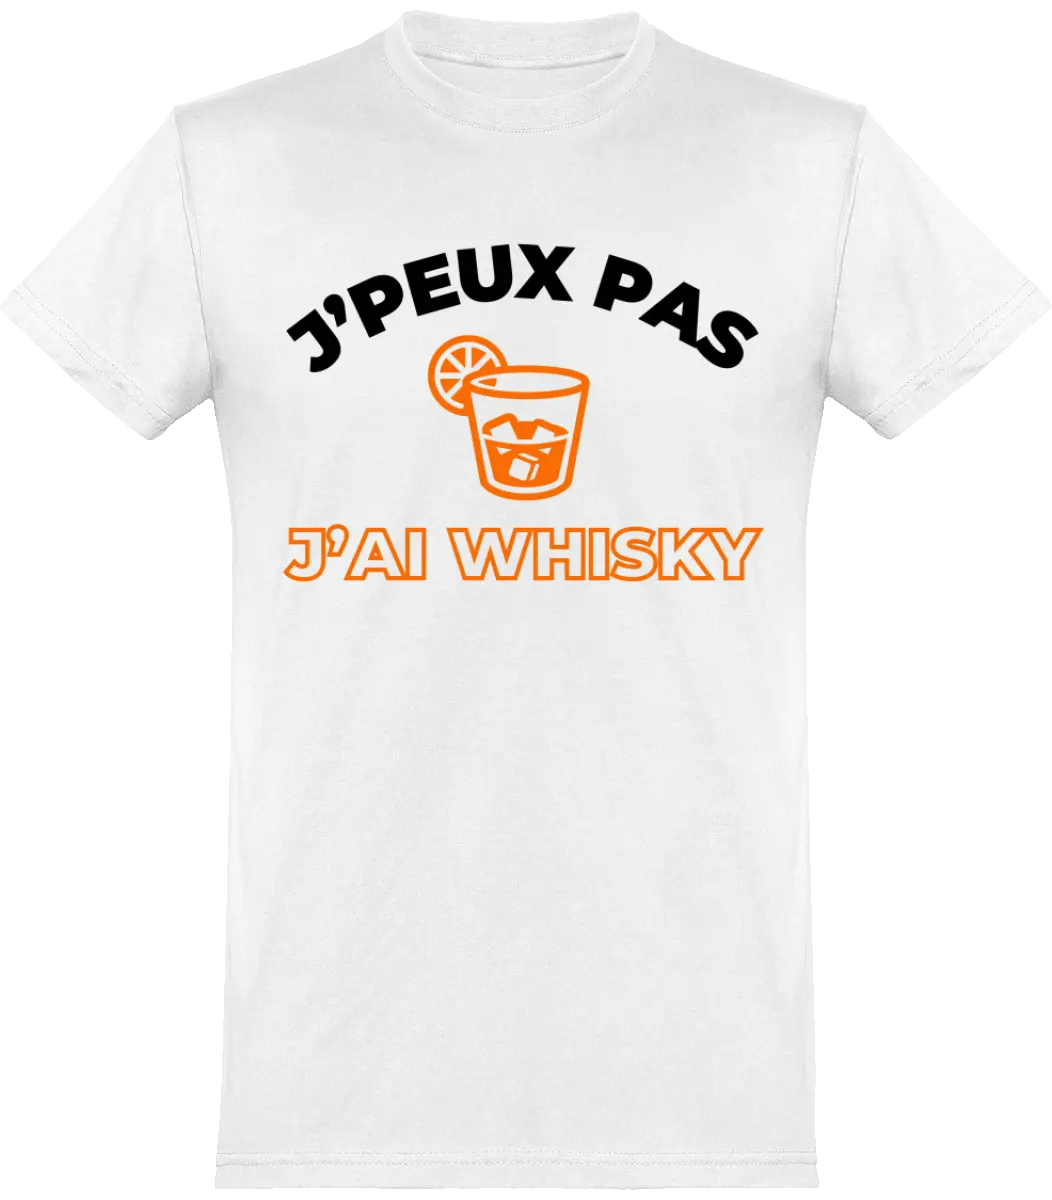 T-shirt Whisky "J'peux pas j'ai whisky" | Mixte - French Humour